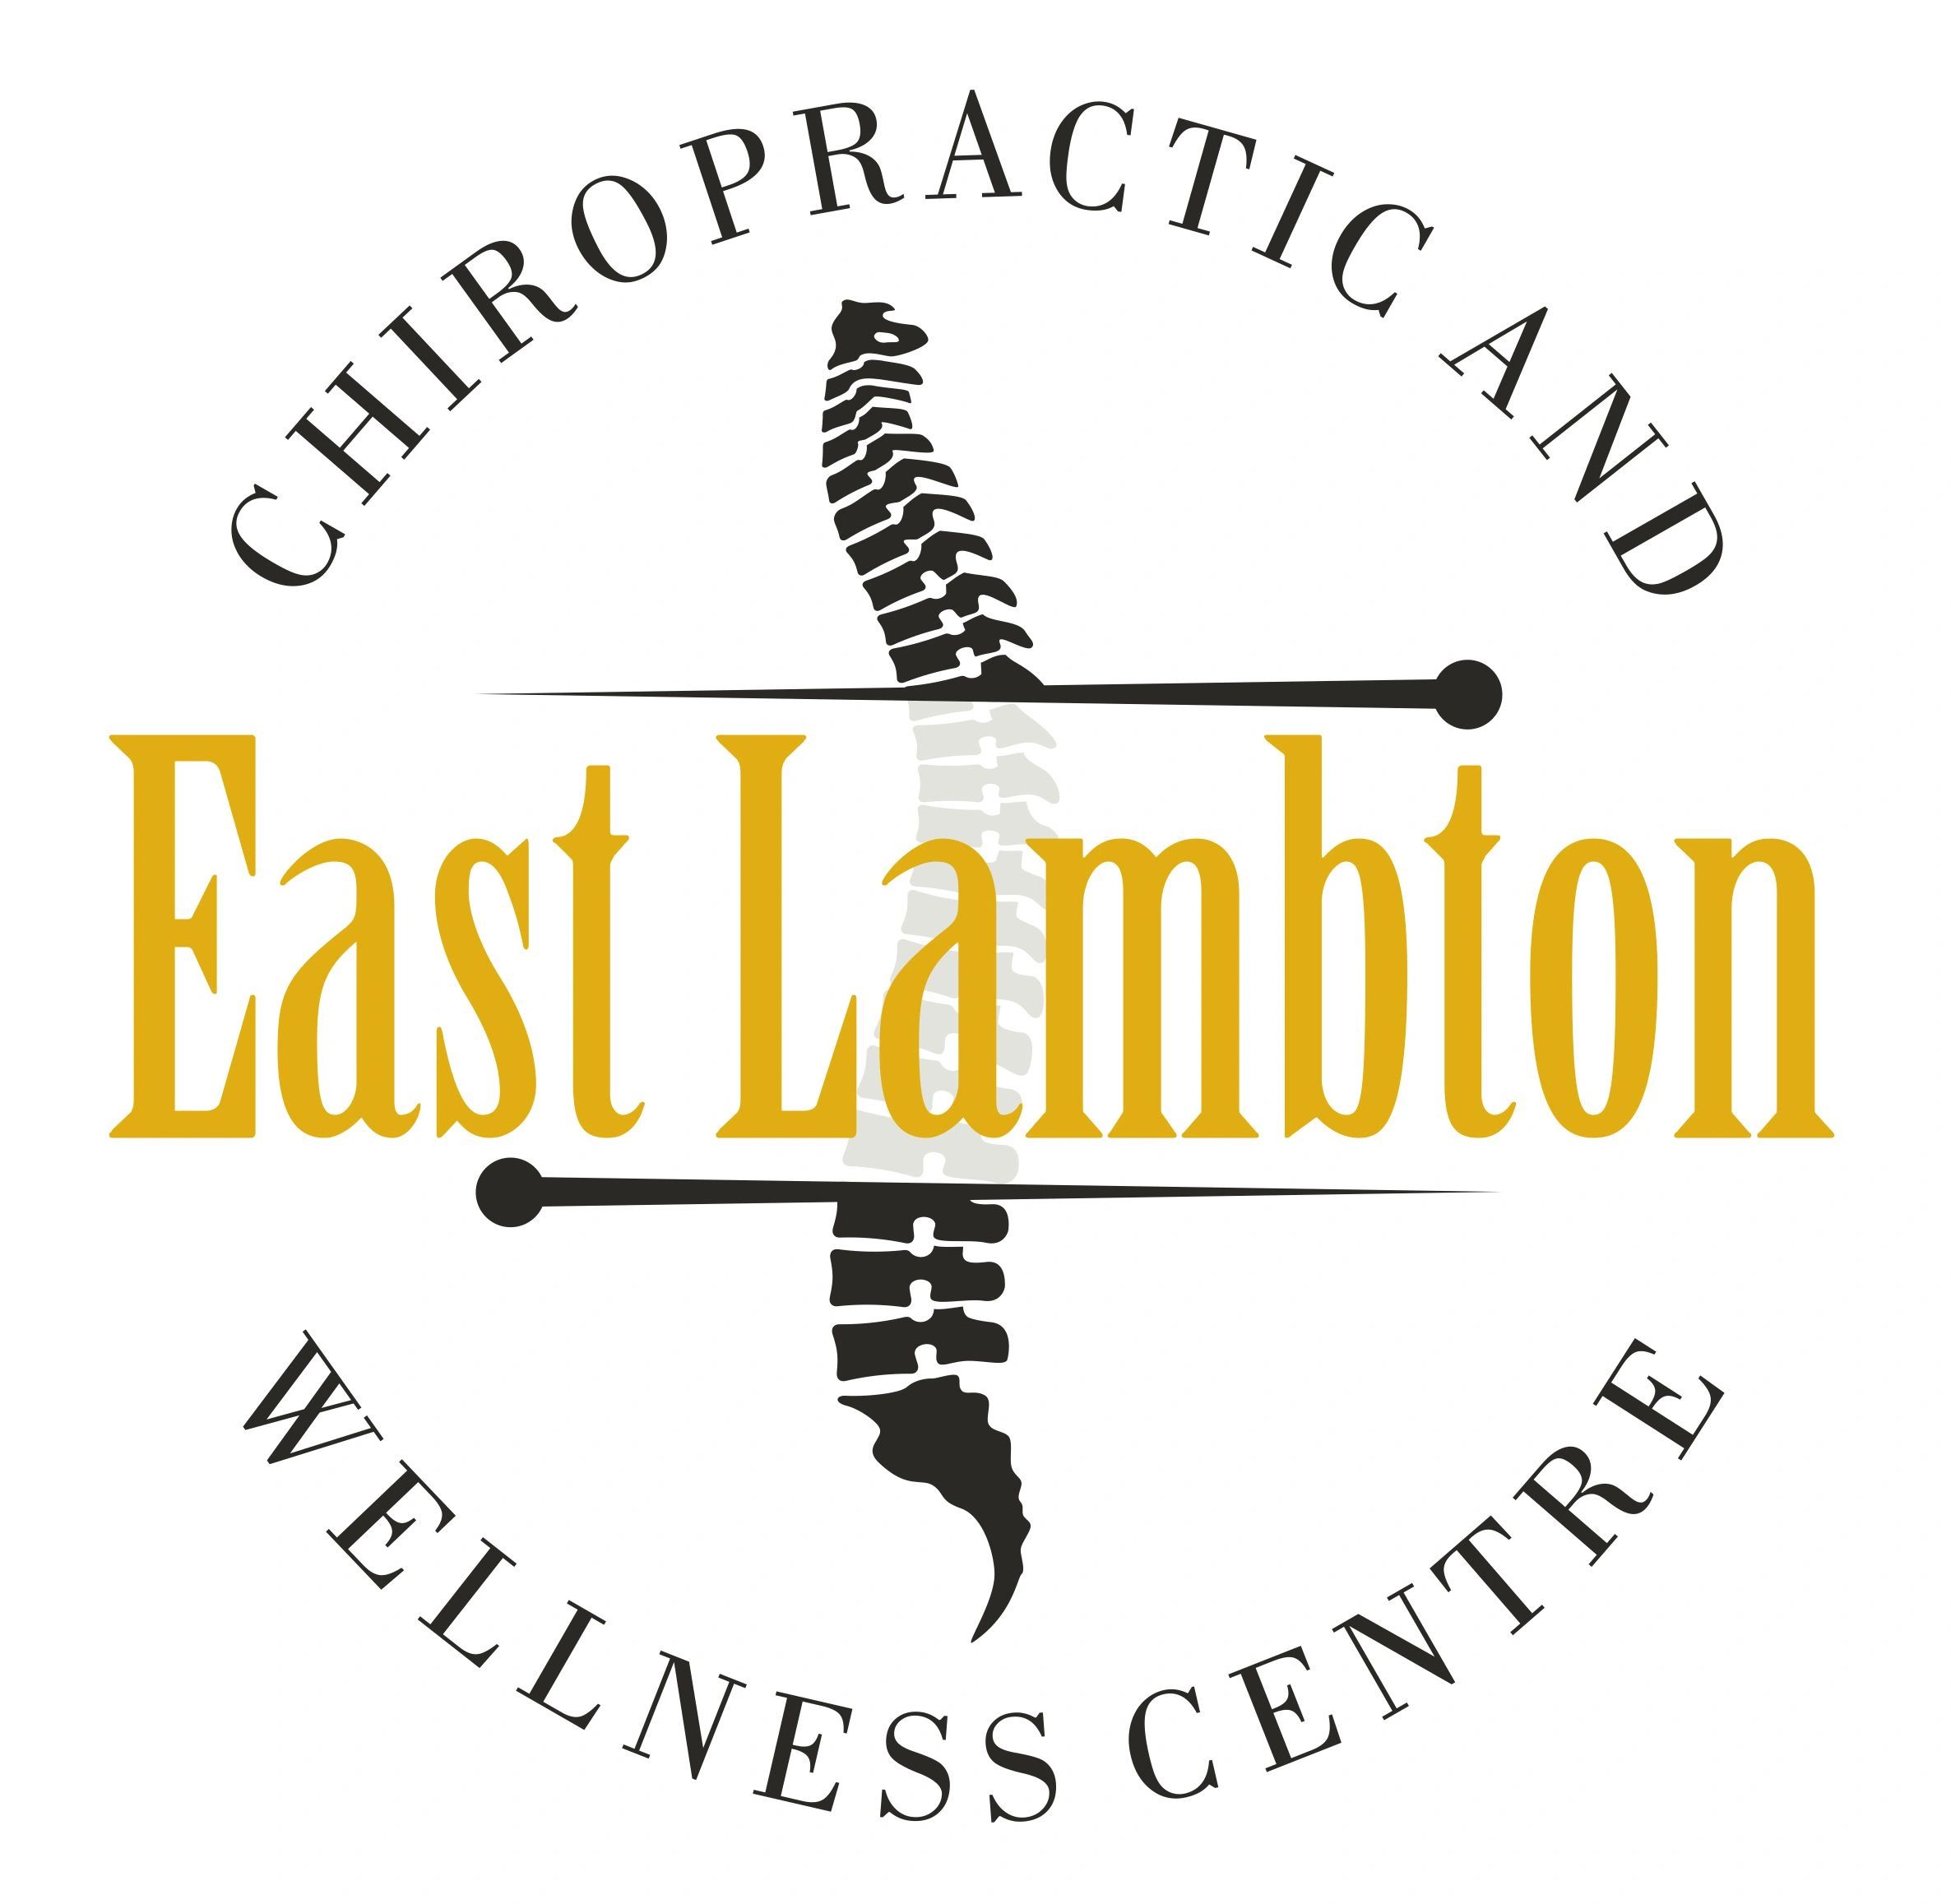 Dr. Jeff Werden chiropractor at East Lambton Chiropractic and Wellness Centre in Watford, Ontario